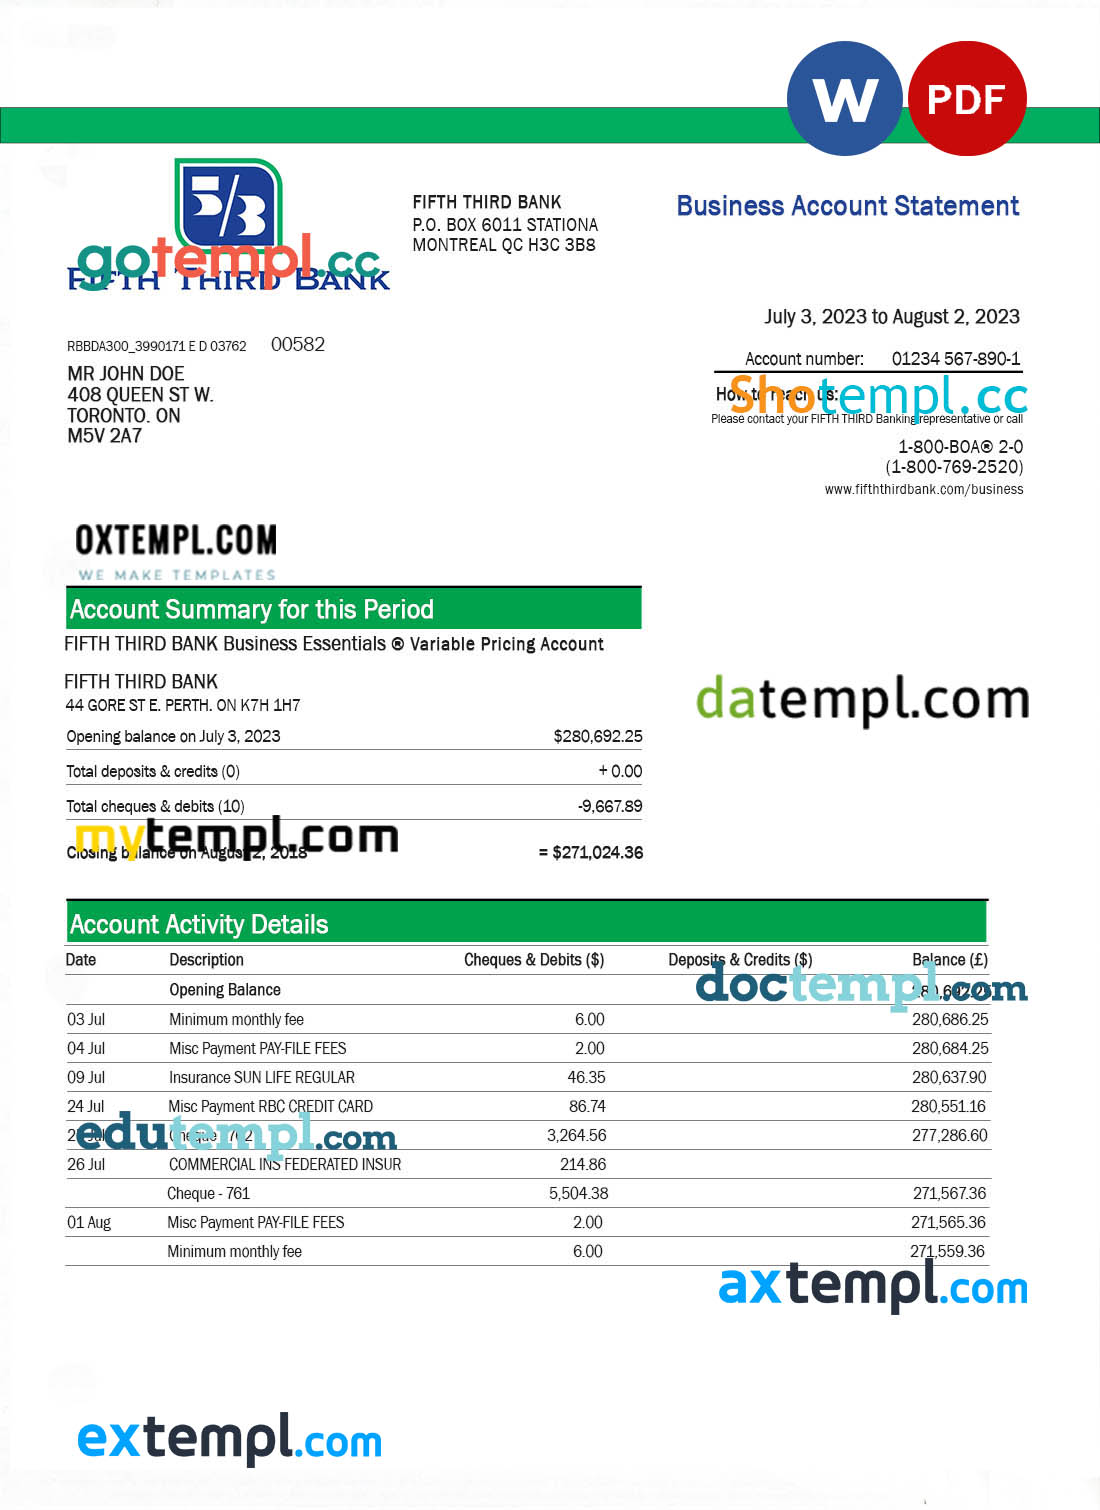 Brazil Banco Votorantim bank statement template in Excel and PDF format